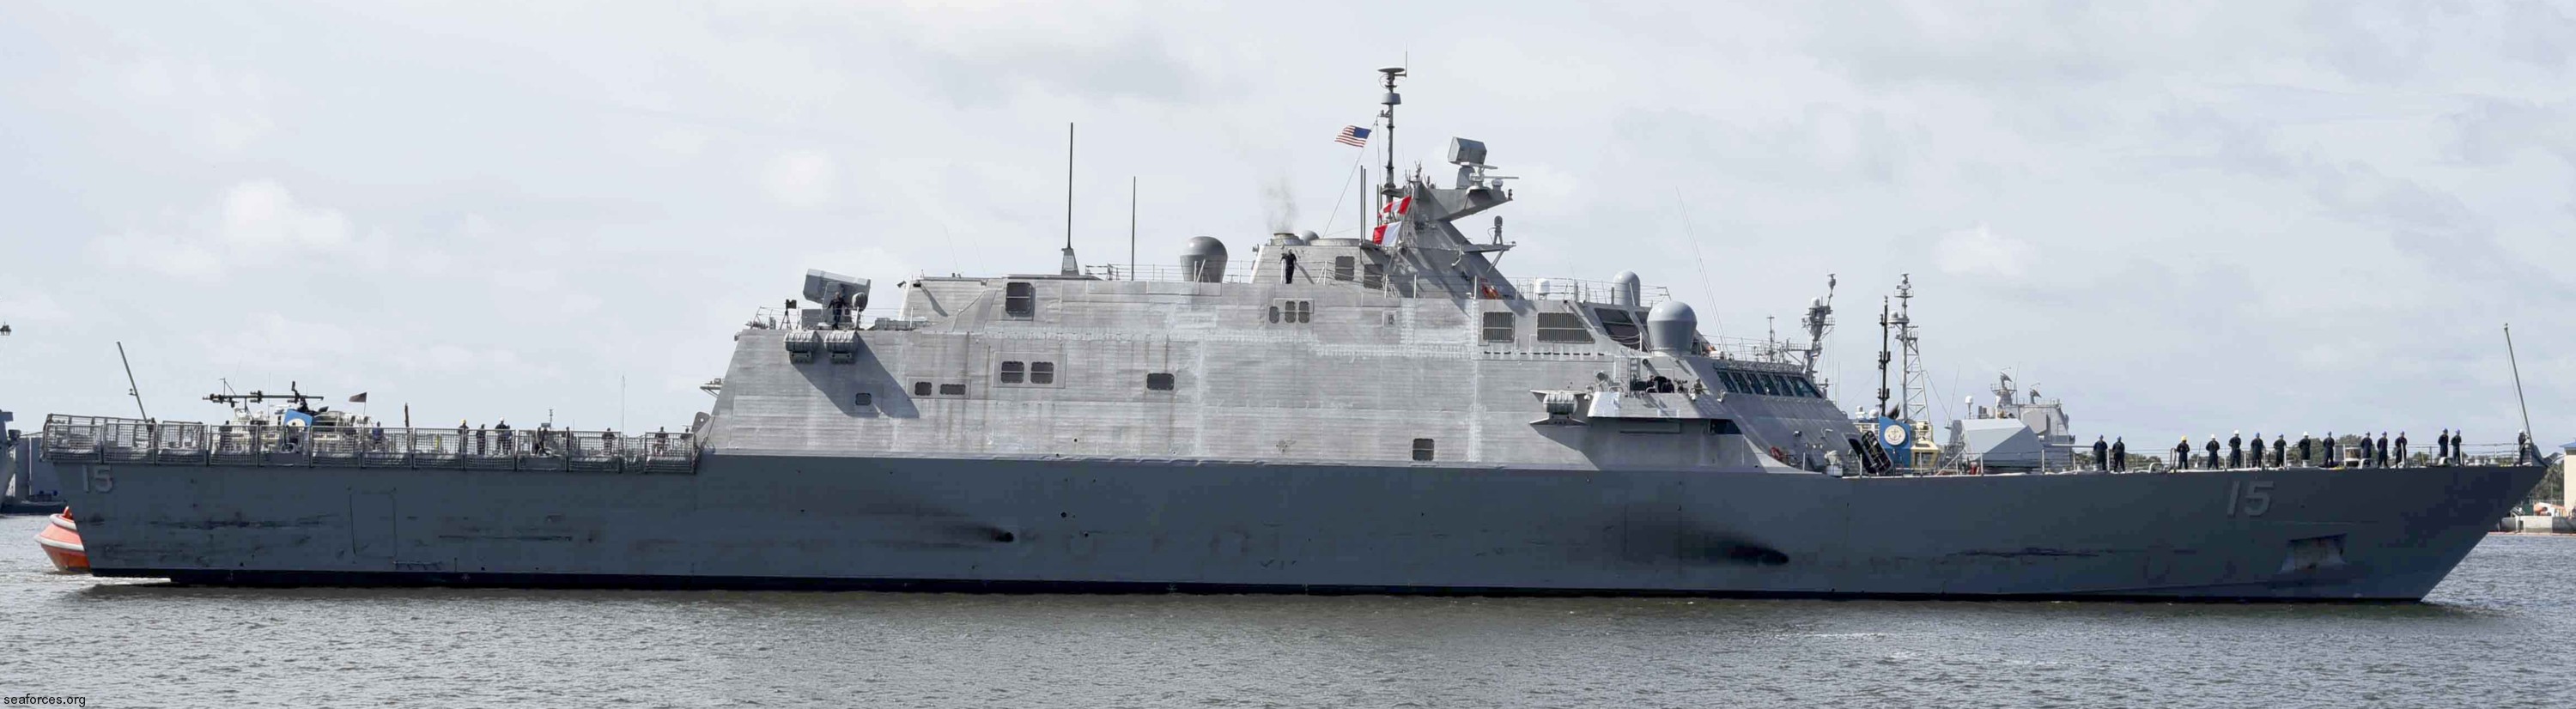 lcs-15 uss billings freedom class littoral combat ship us navy21 navsta mayport florida